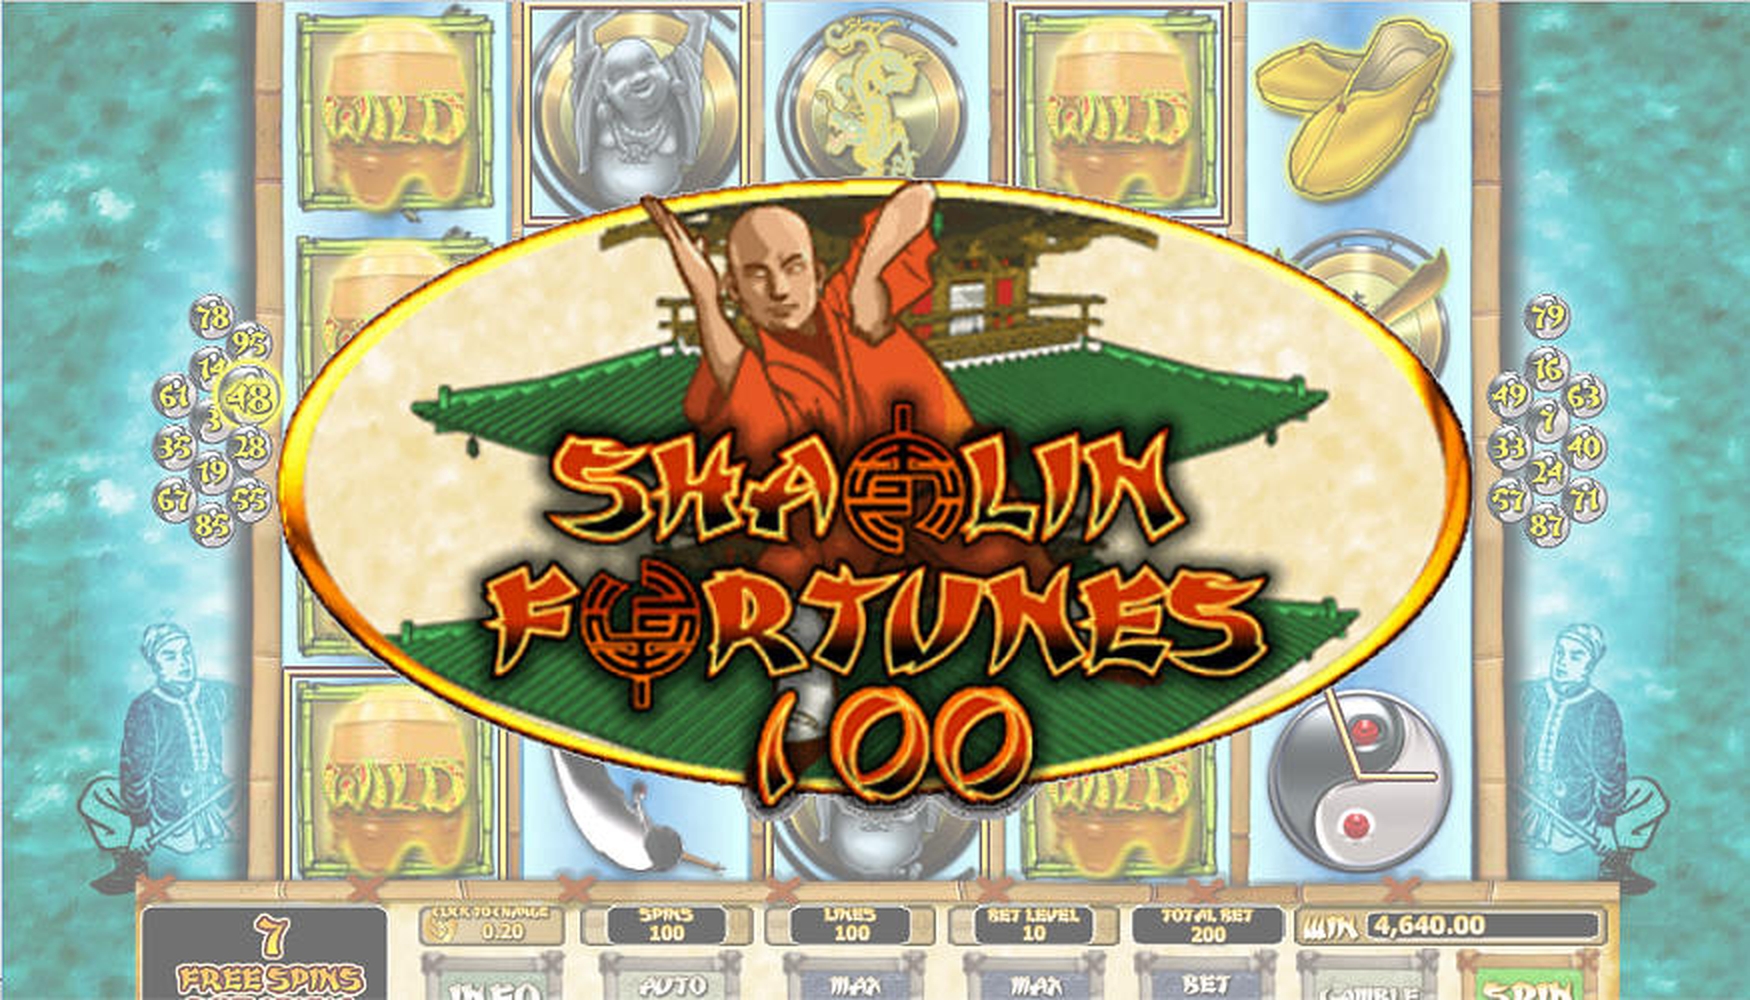 Shaolin Fortunes 100 demo